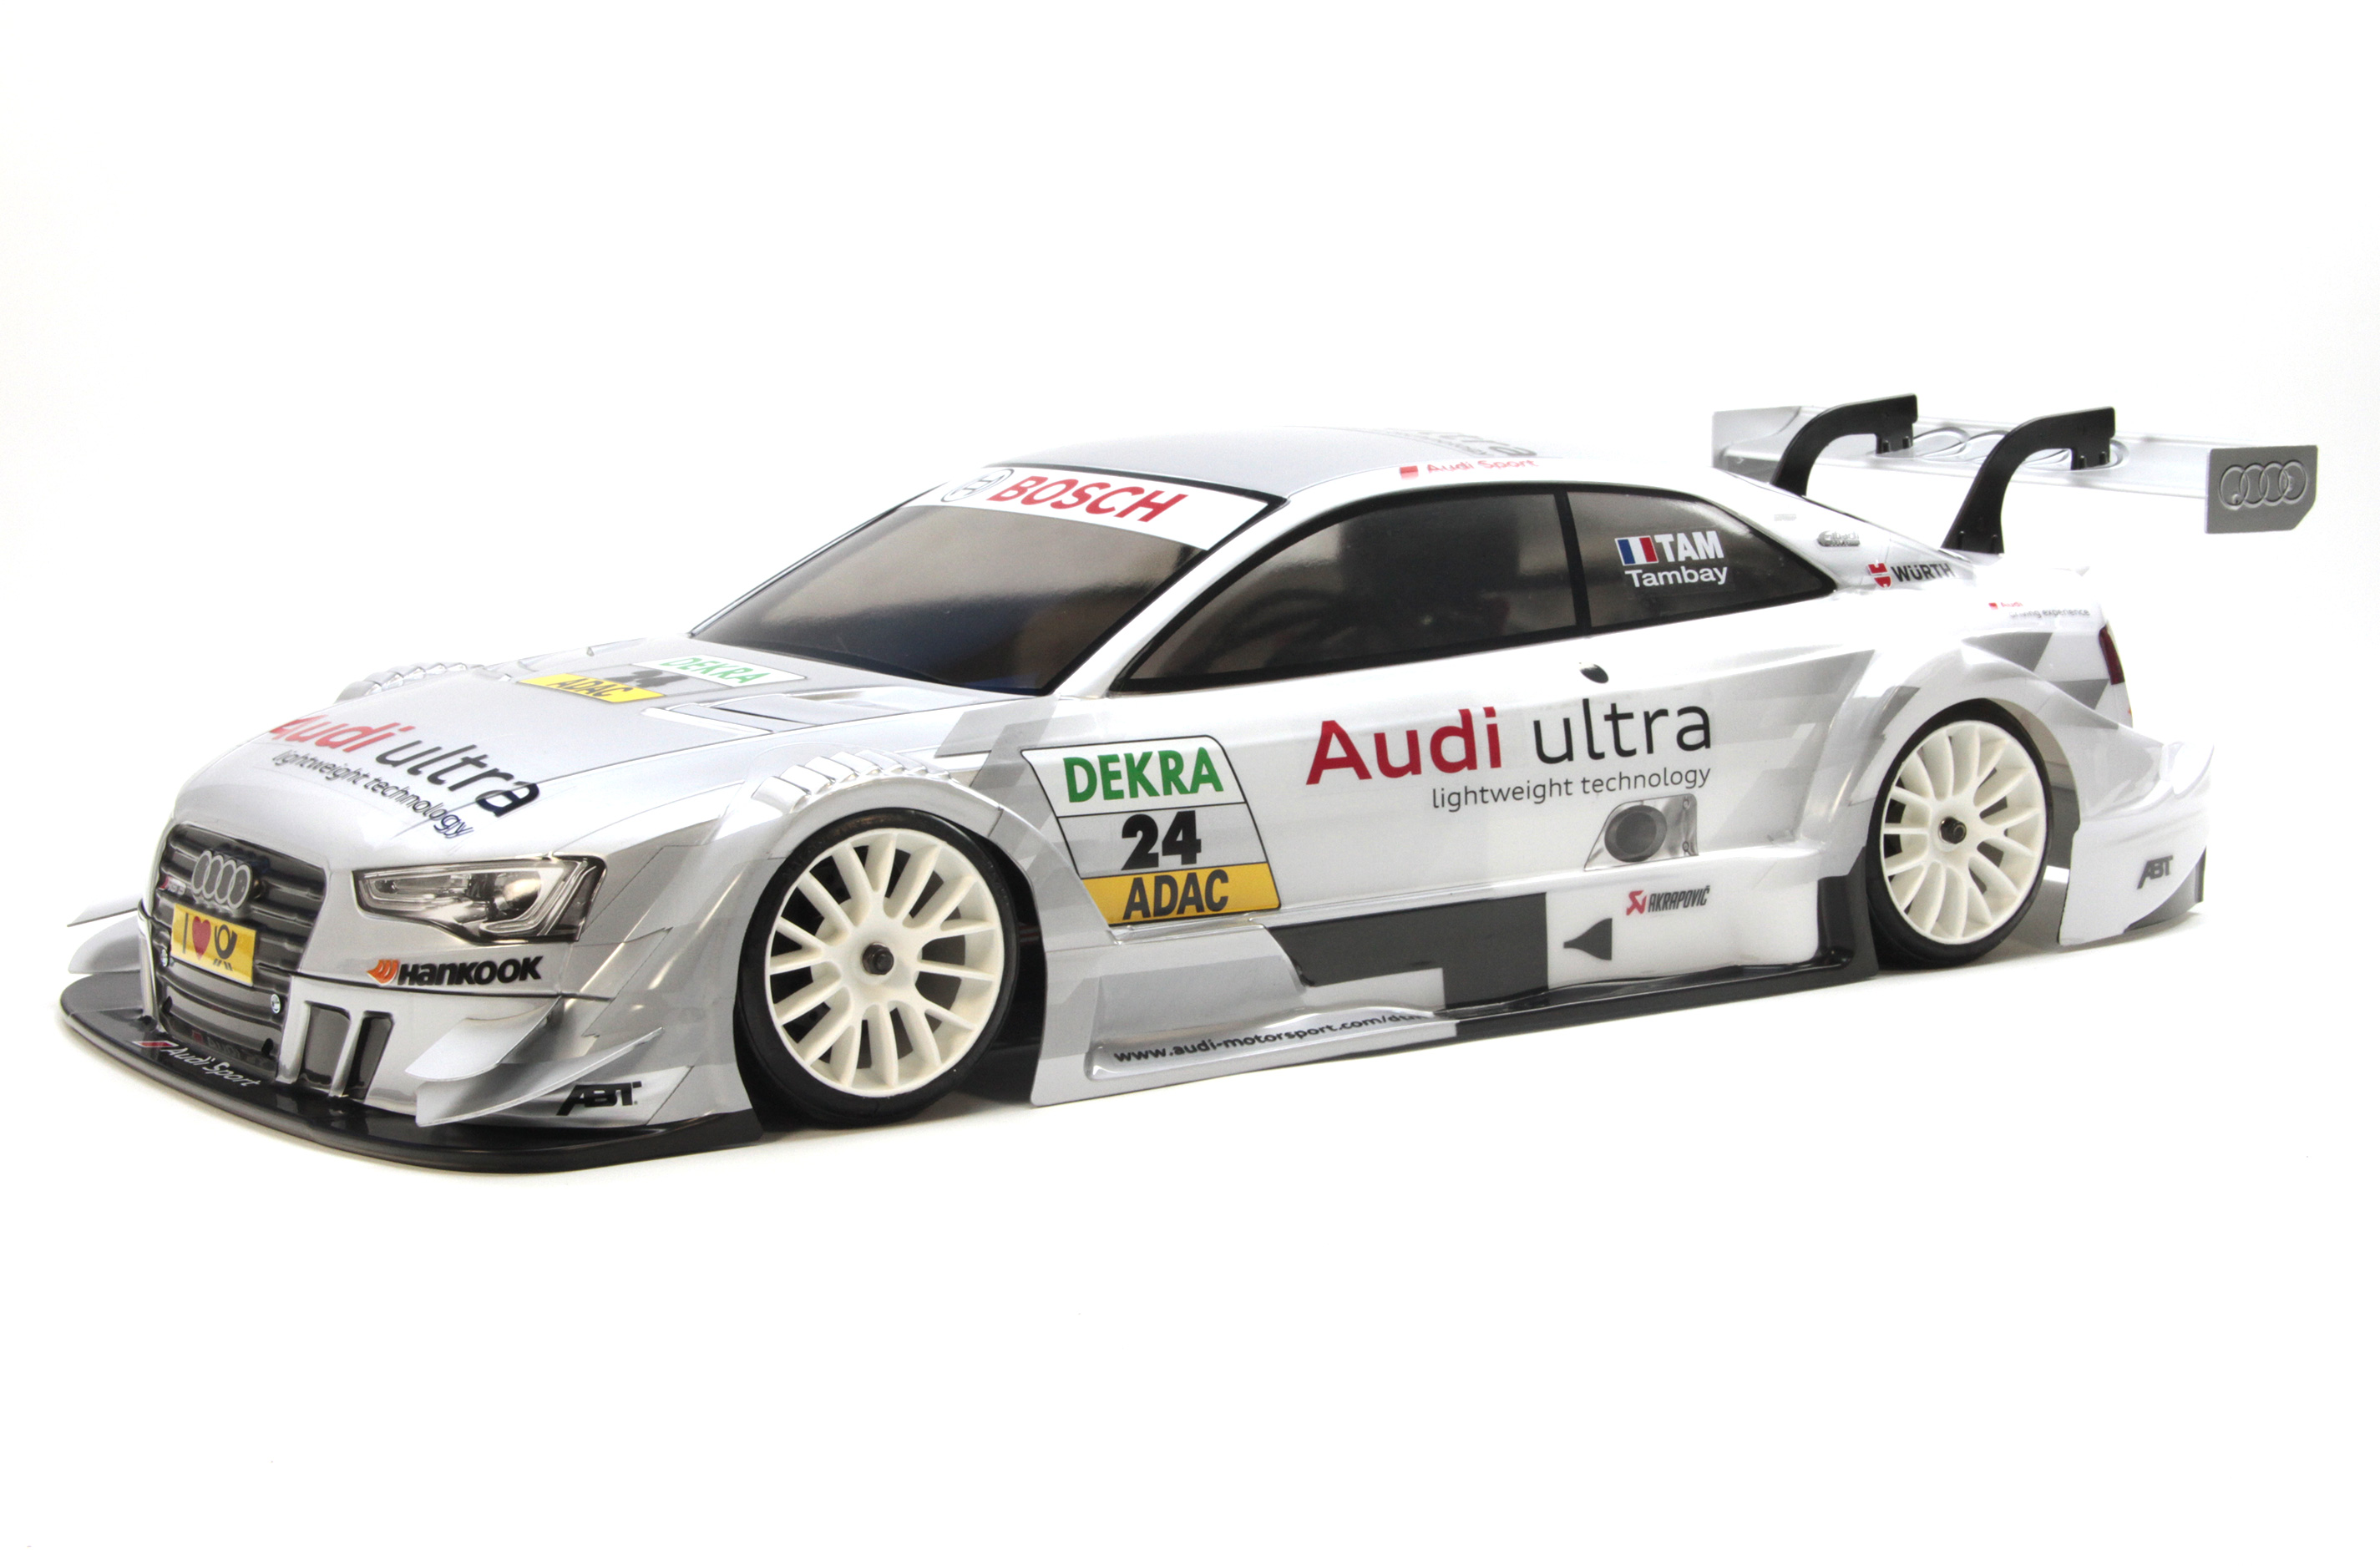 4158 FG Audi RS5 DTM body shell, painted, Team Audi-Ultra paint theme